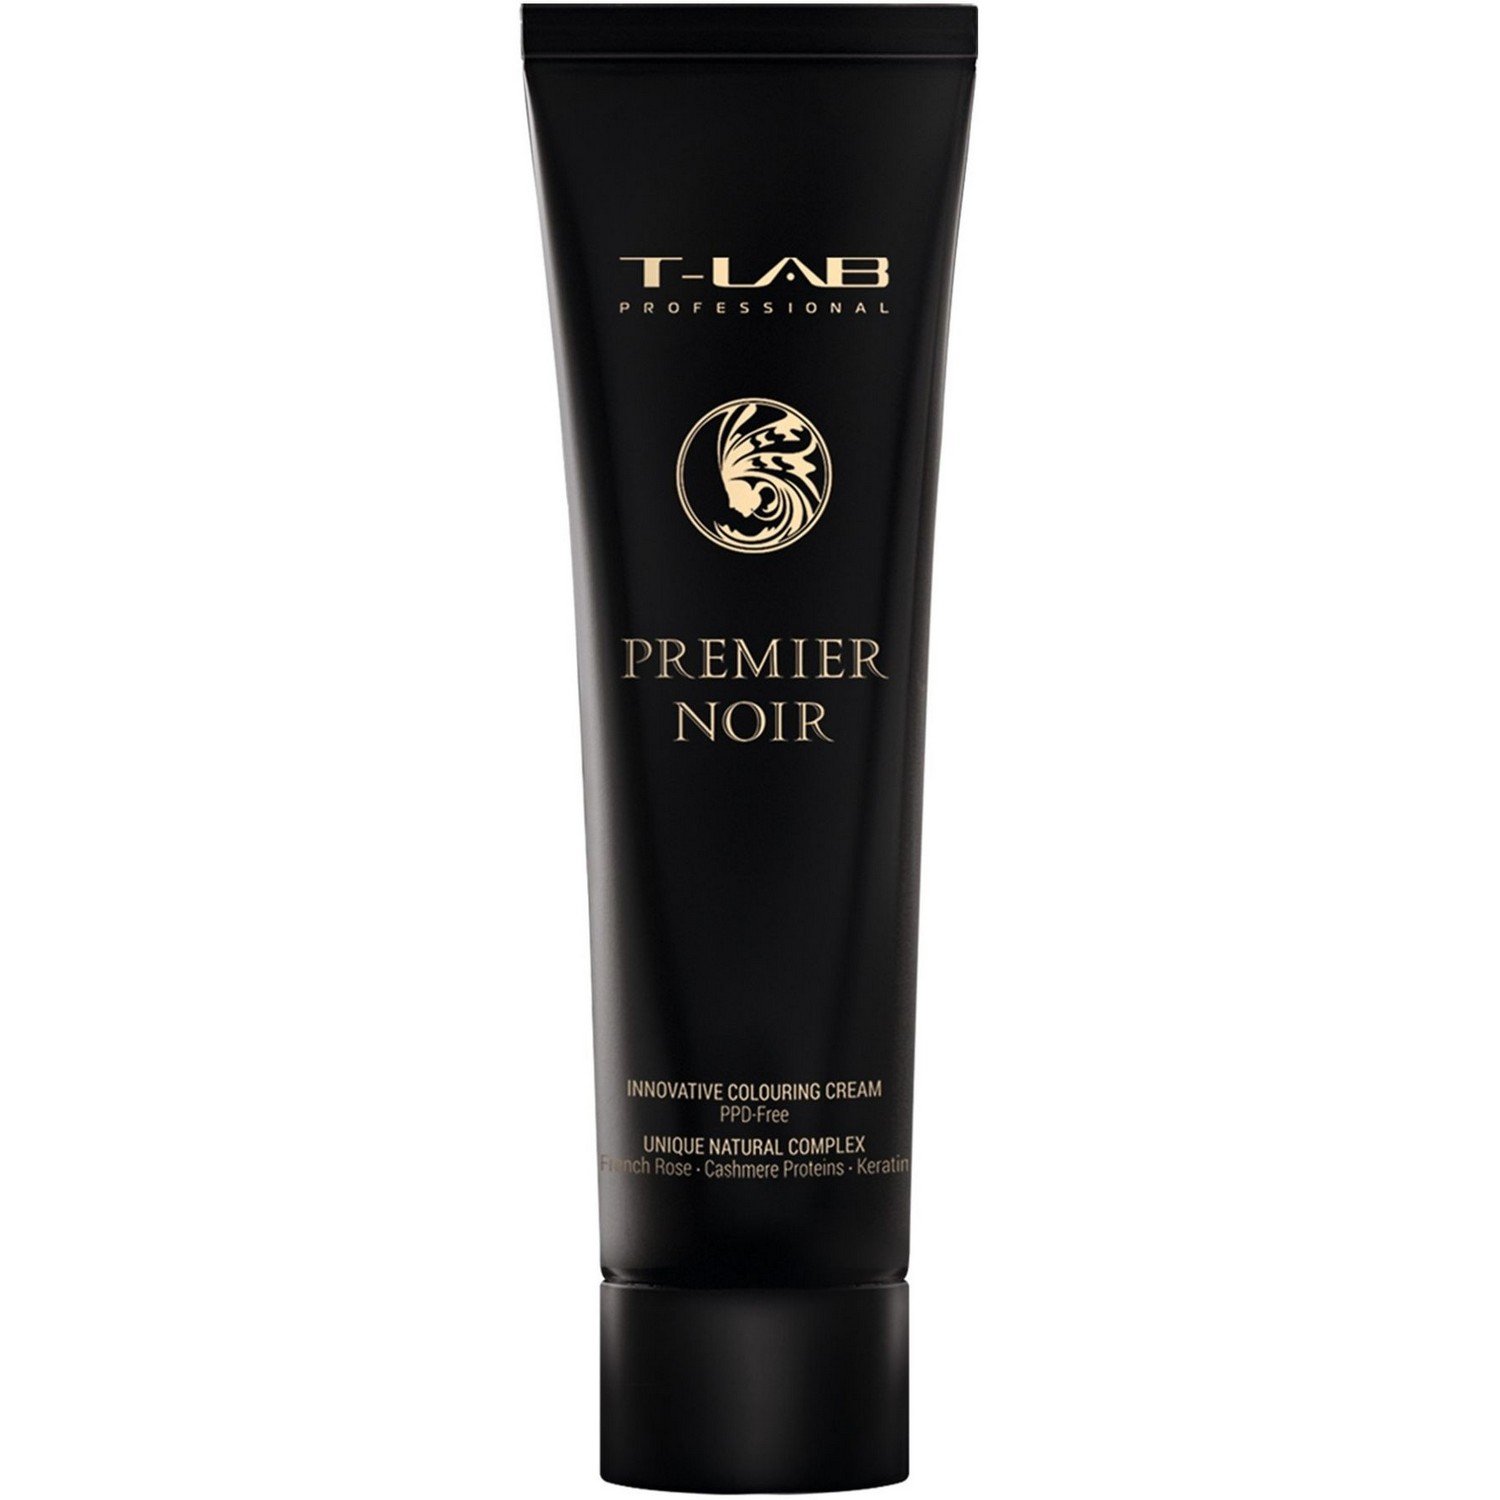 Крем-краска T-LAB Professional Premier Noir colouring cream, оттенок 900 (natural super blonde) - фото 1